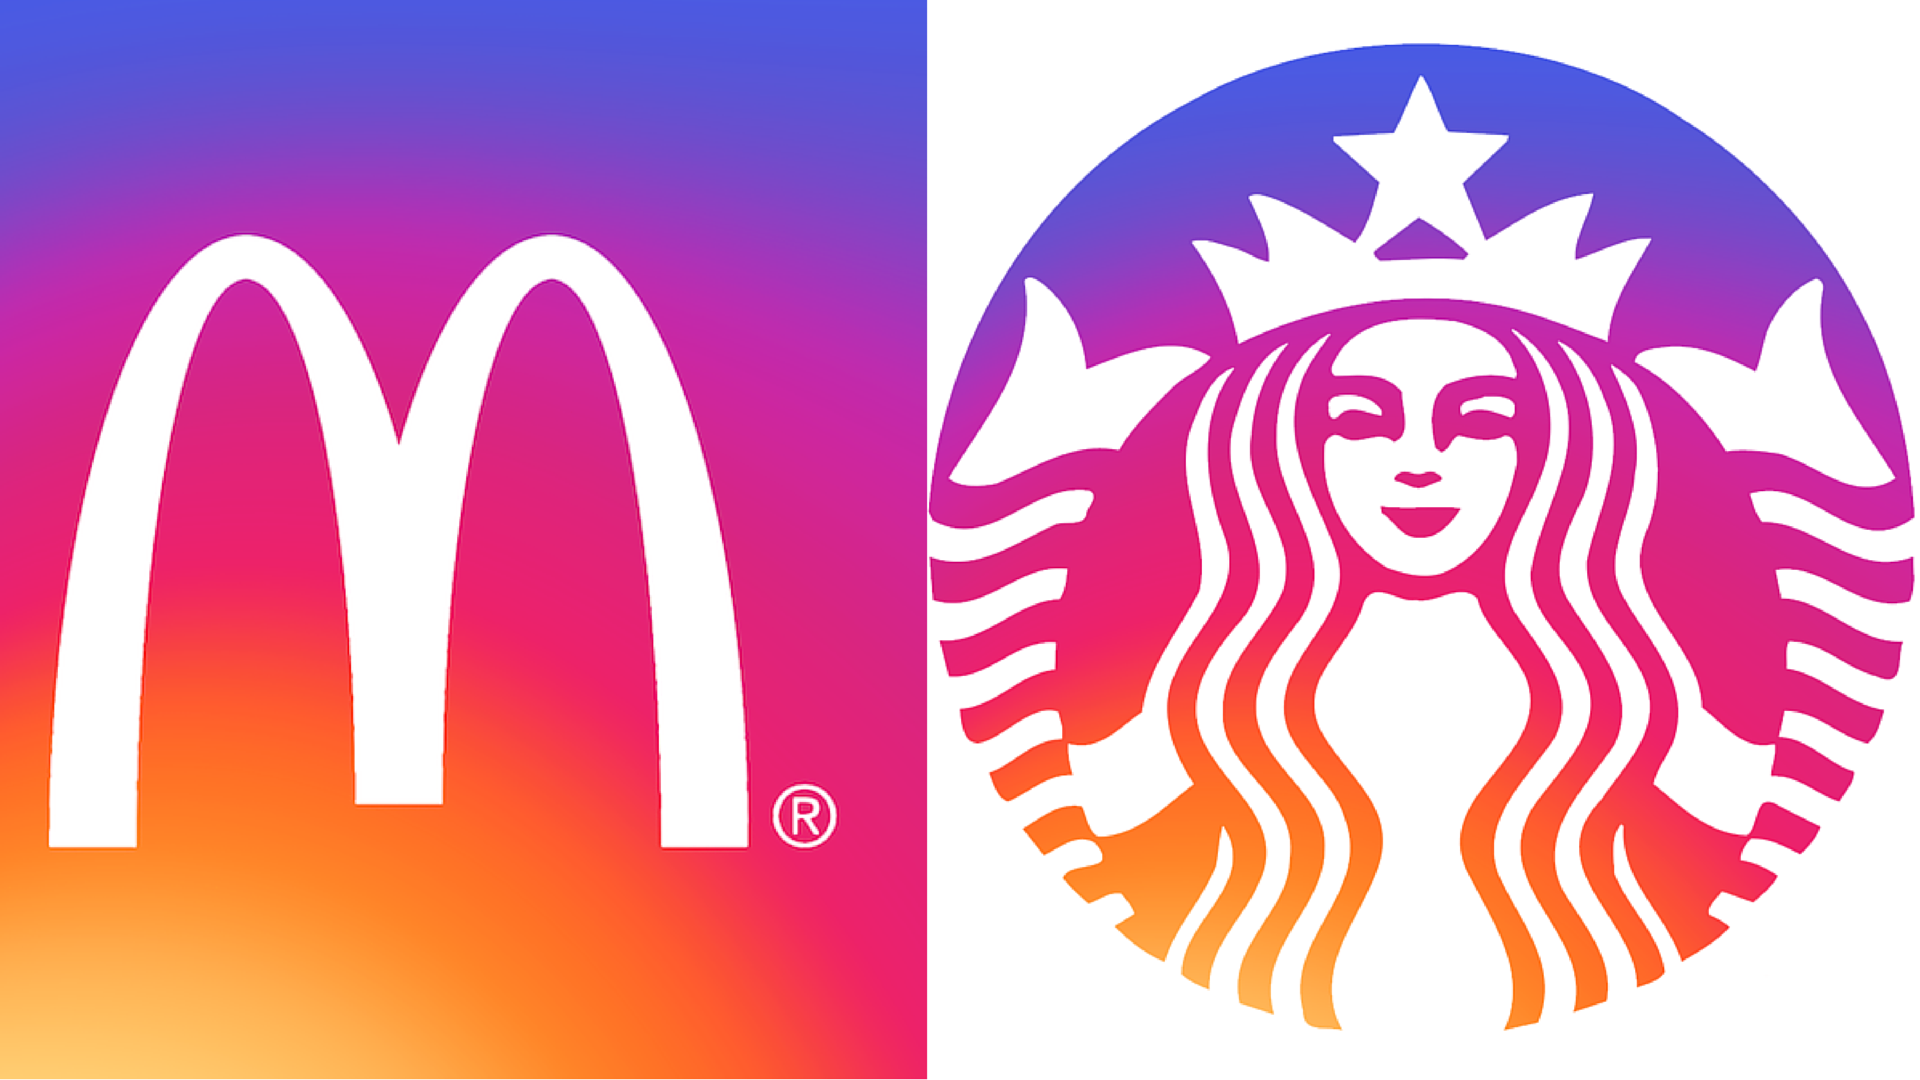 Logos marques version Instagram